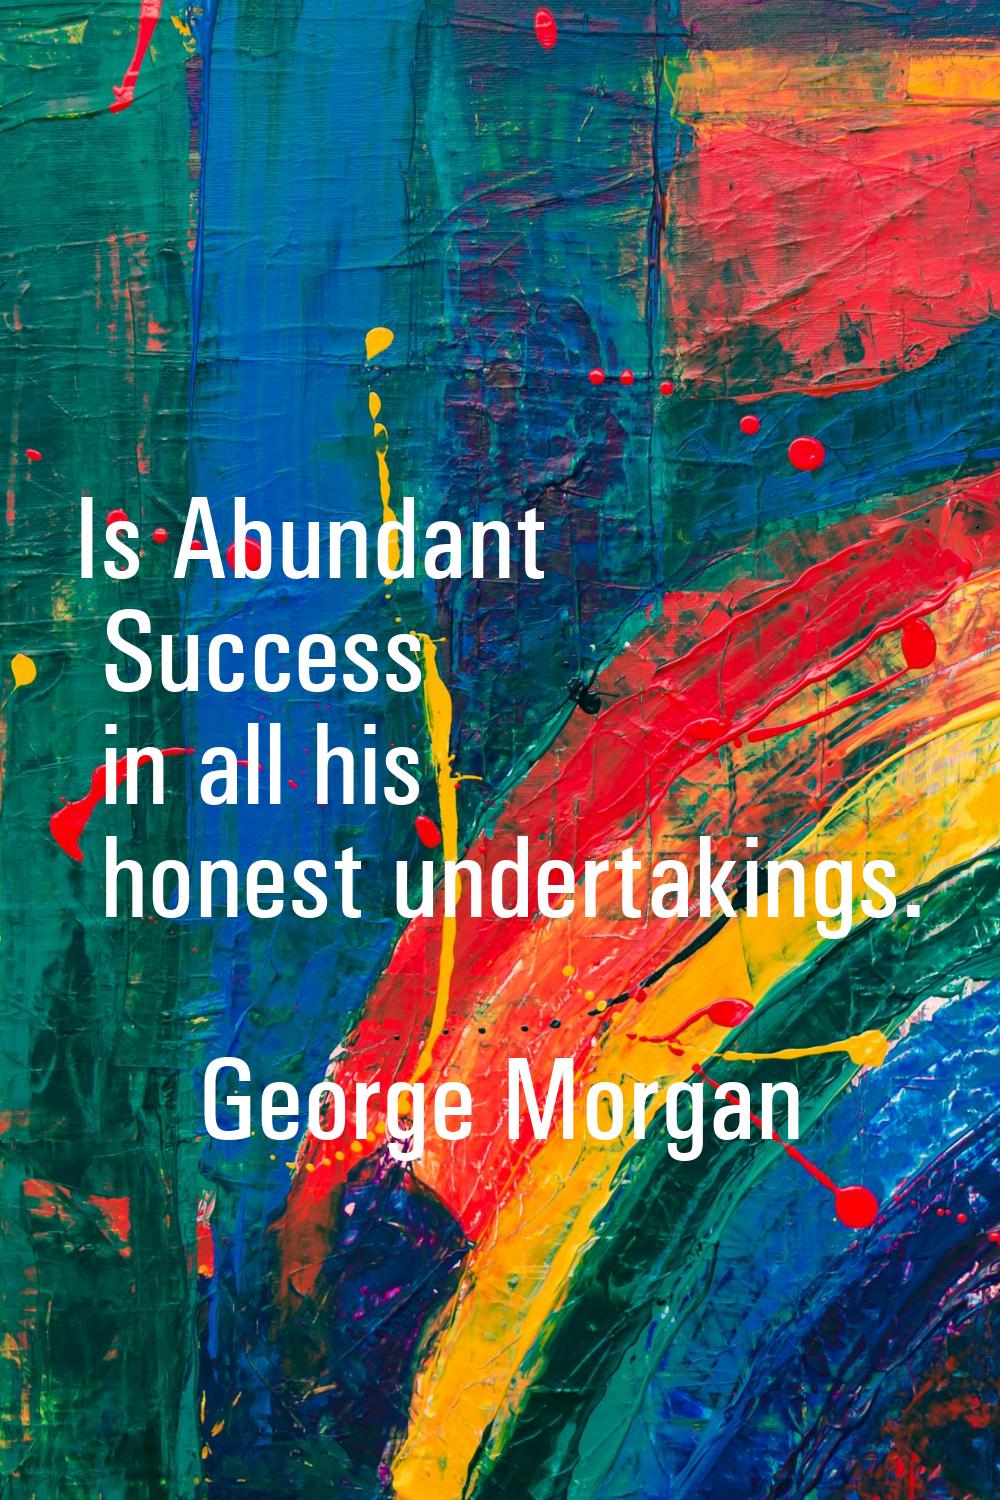 Is Abundant Success in all his honest undertakings.